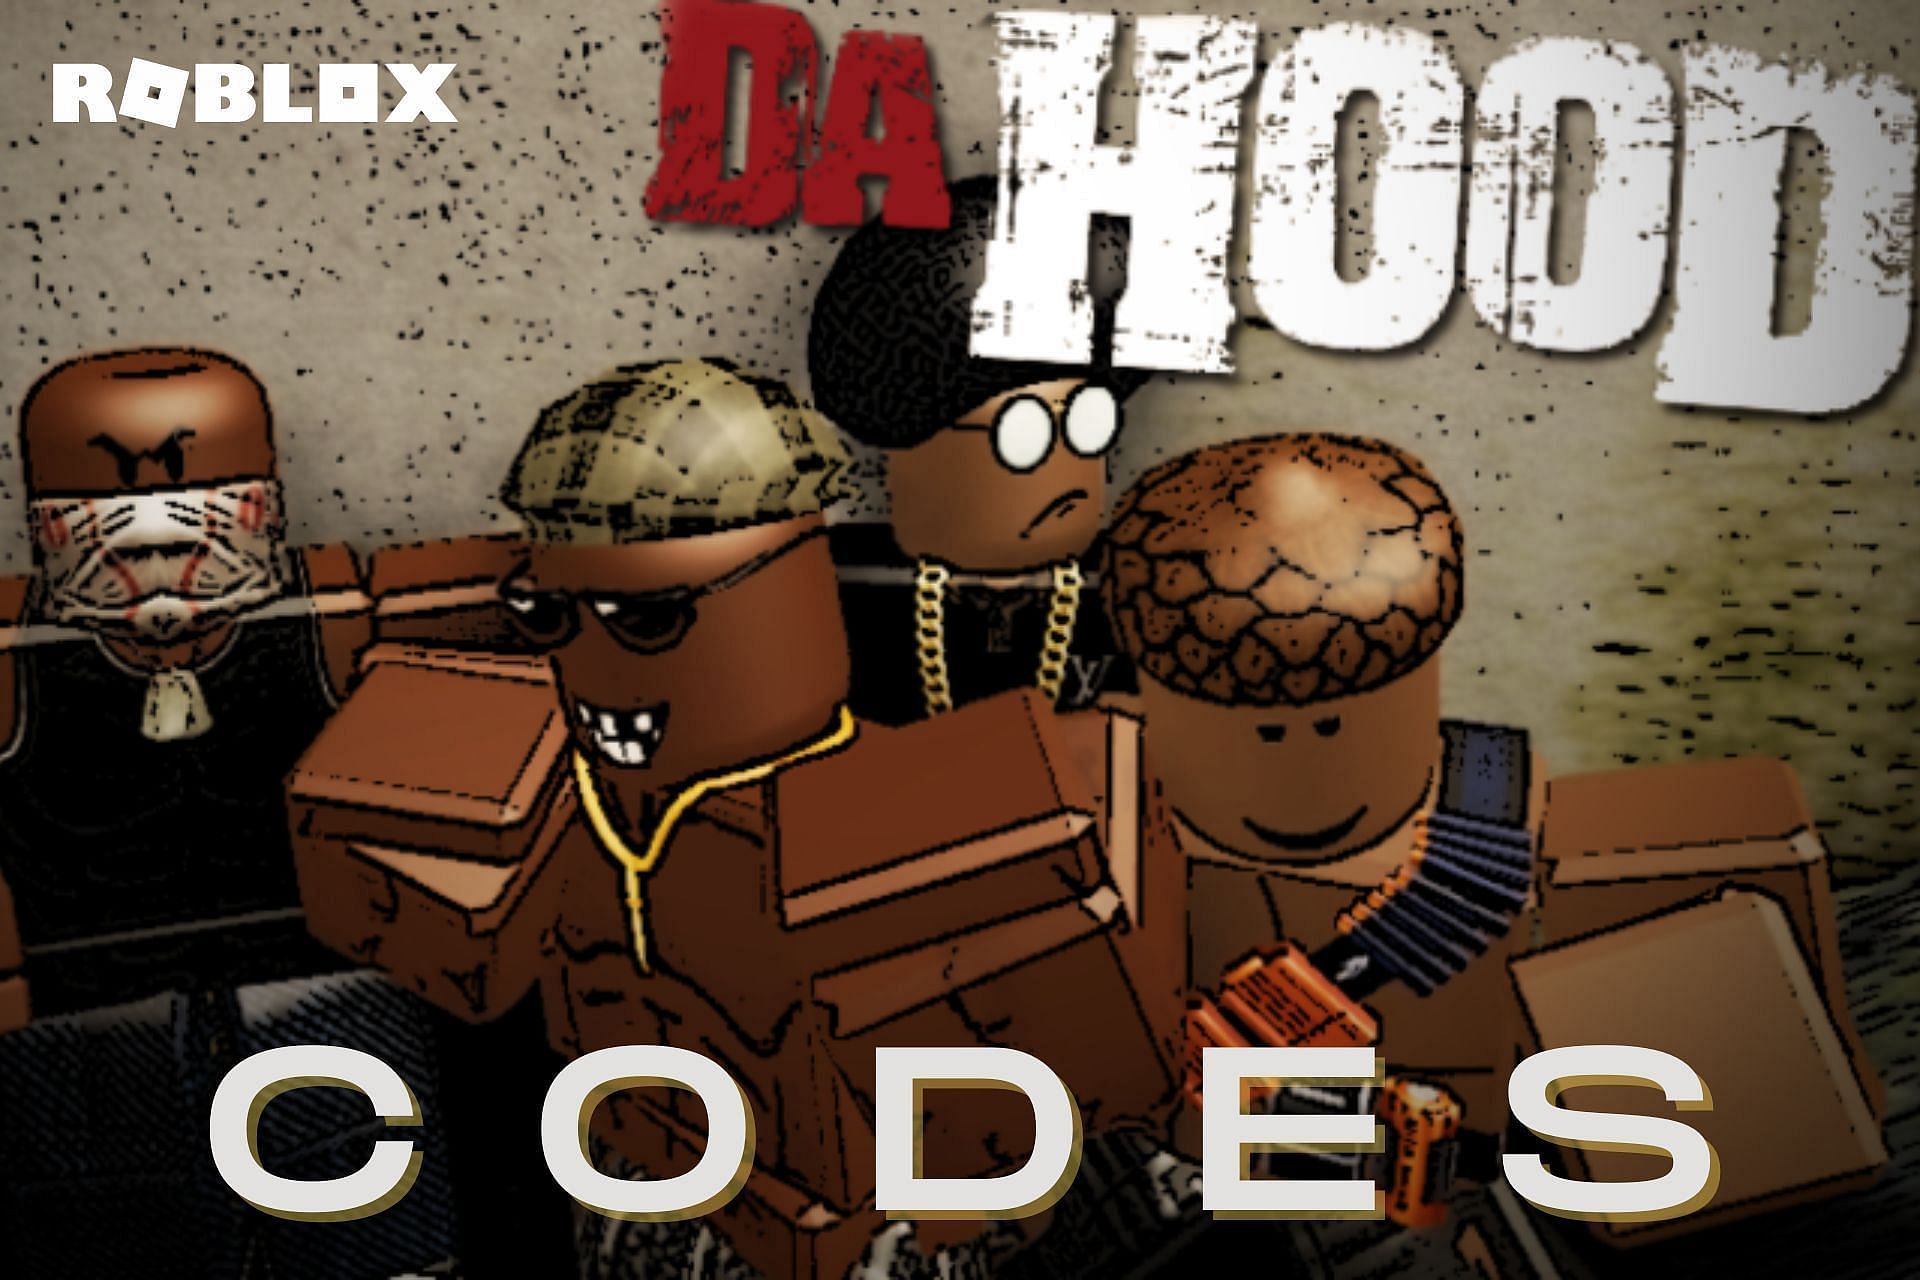 Featured image of Da Hood codes (Image via Sportskeeda)